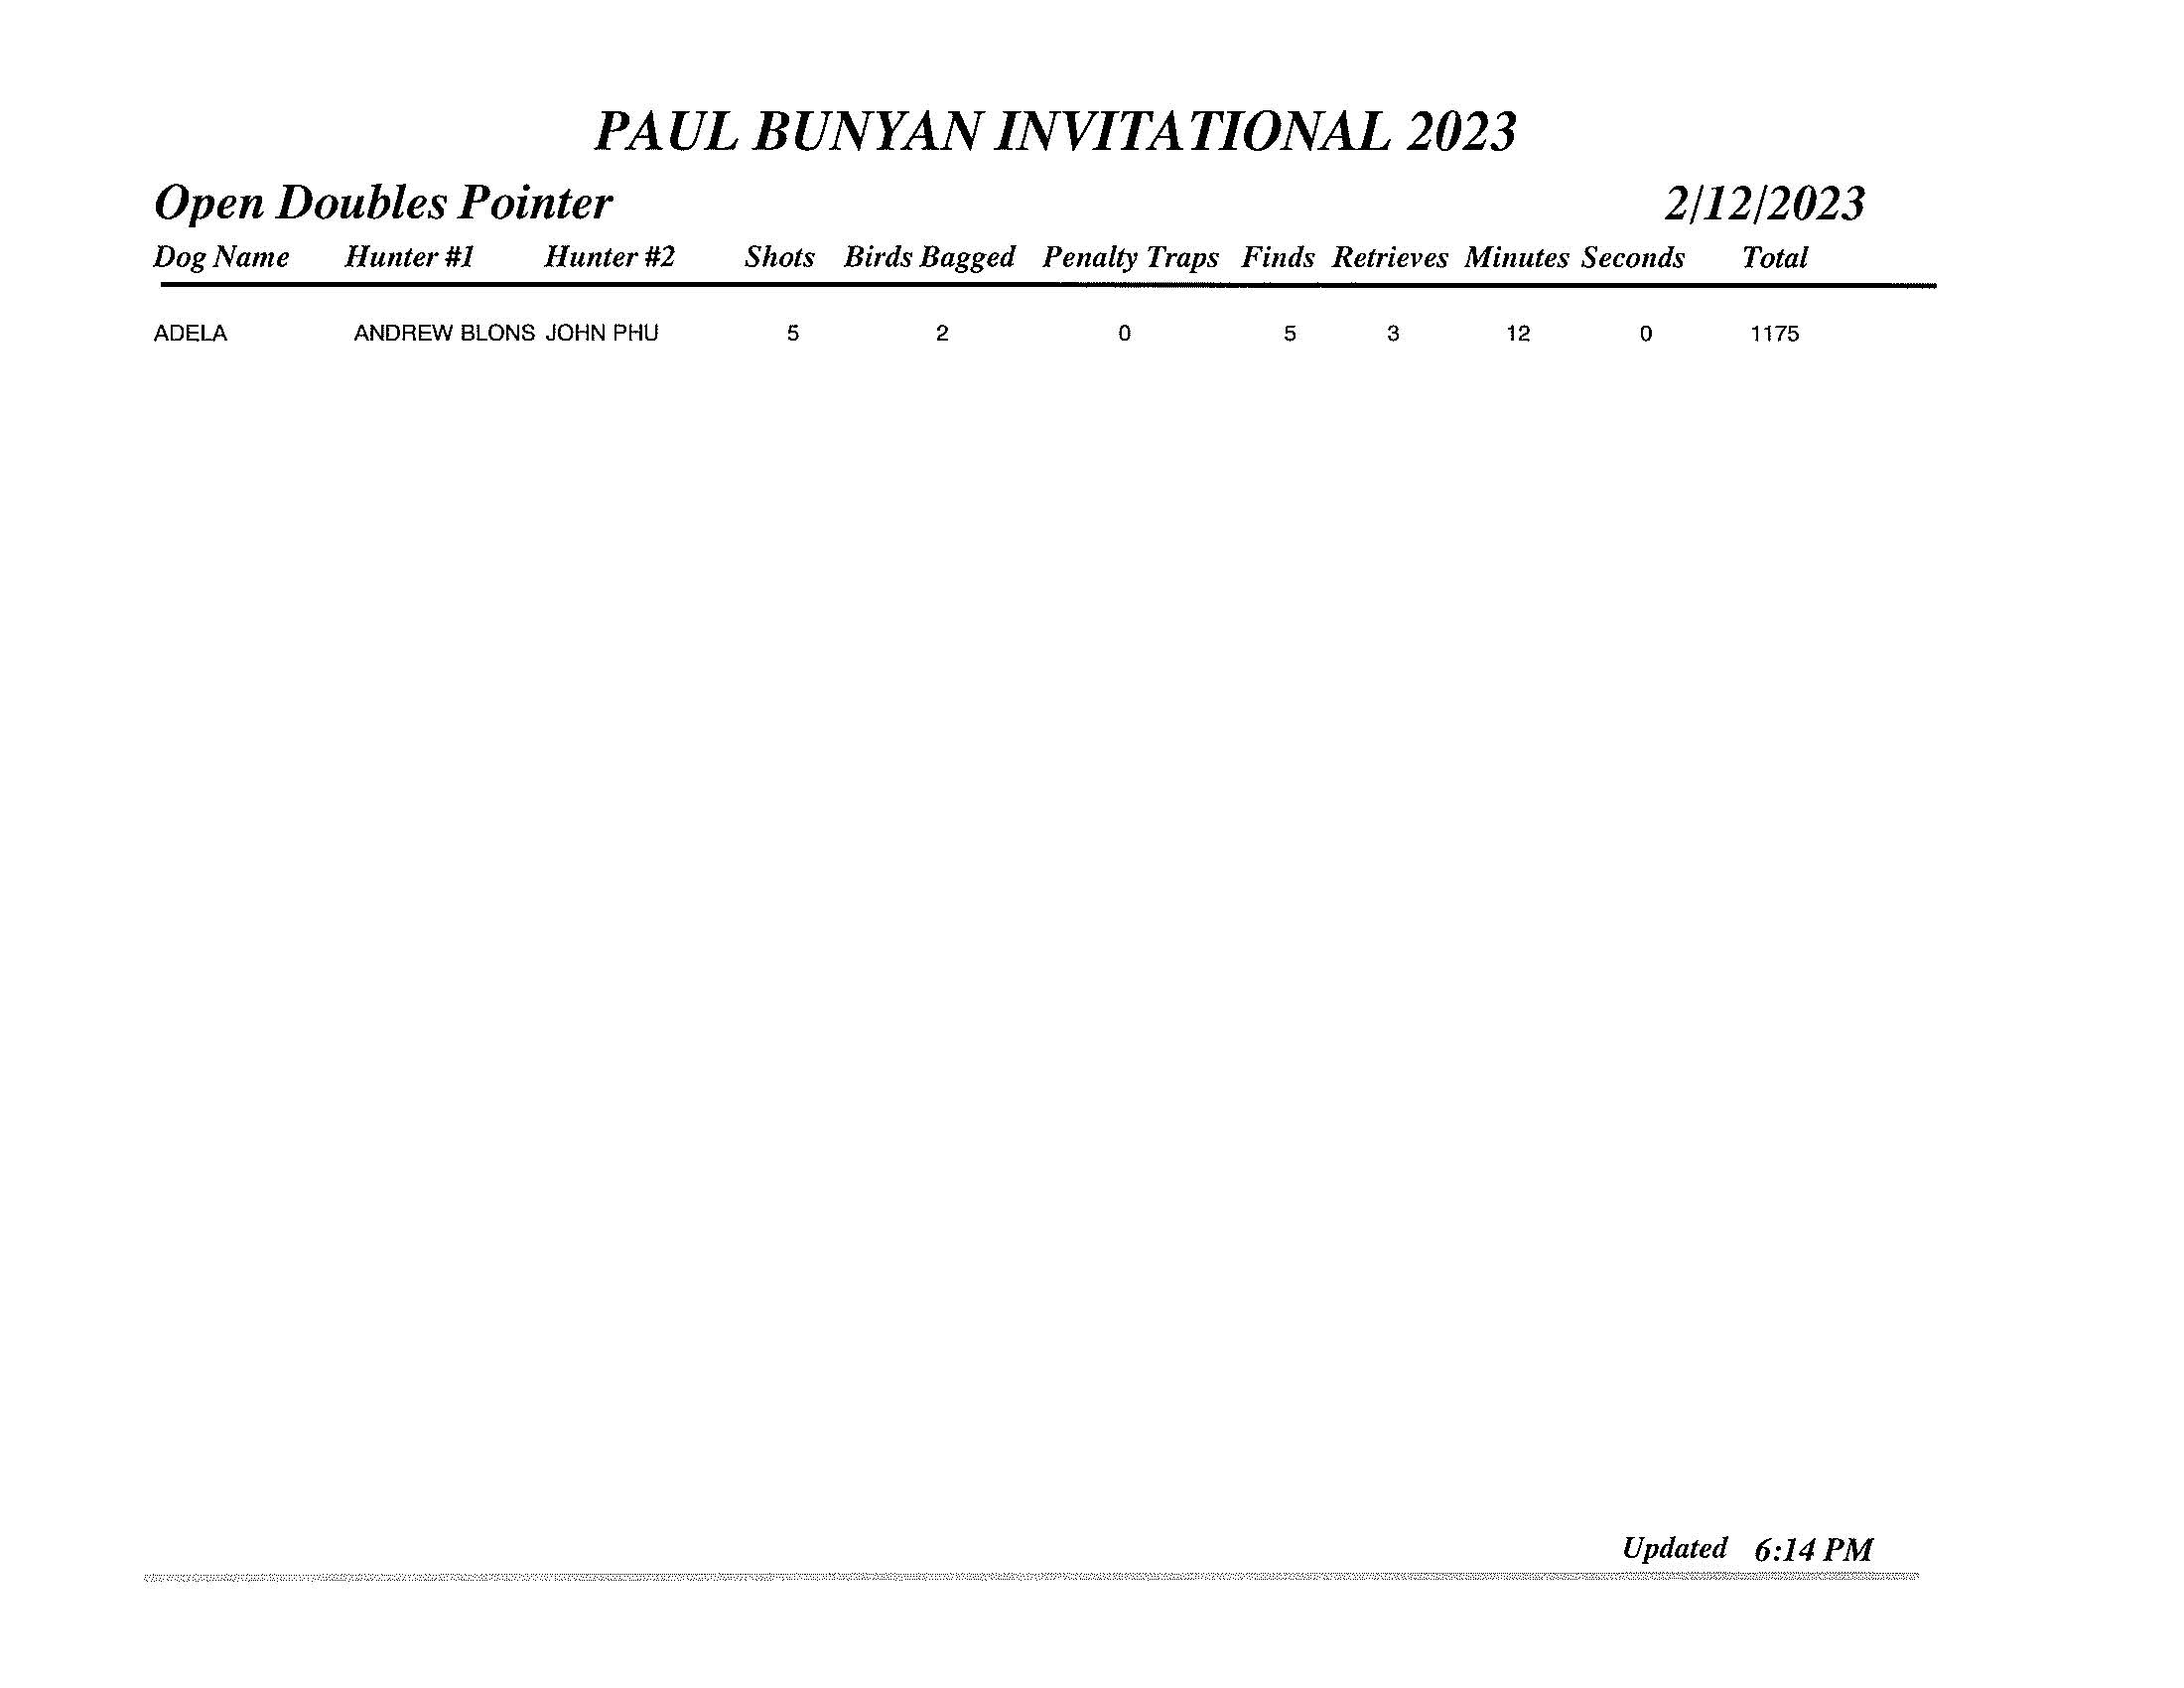 GDC Paul Bunyan Final 2023 (9)